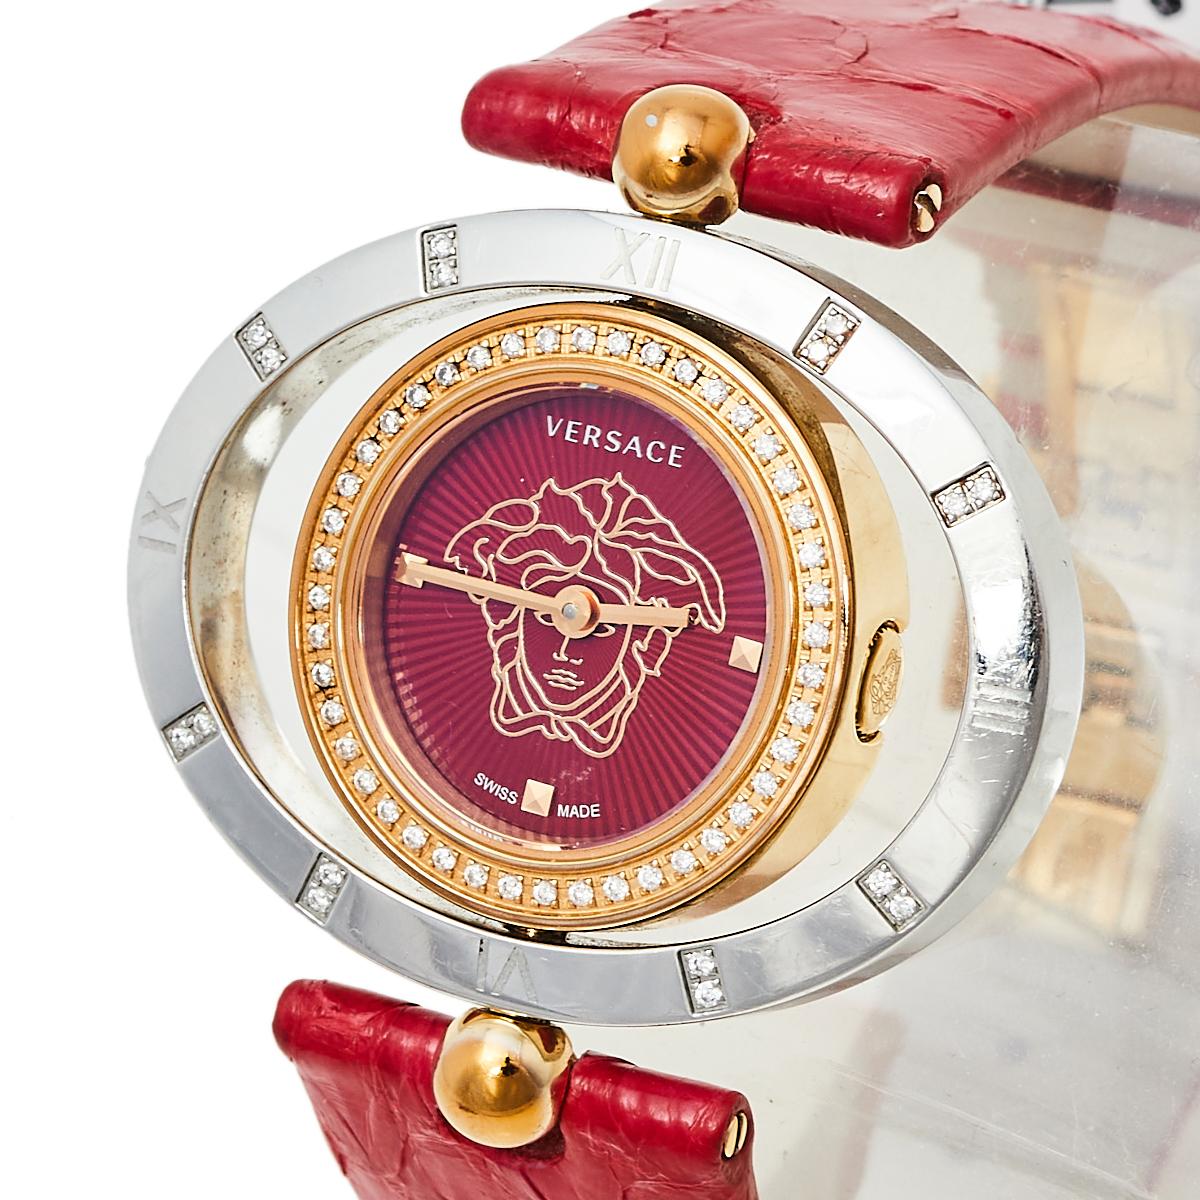 versace red watch